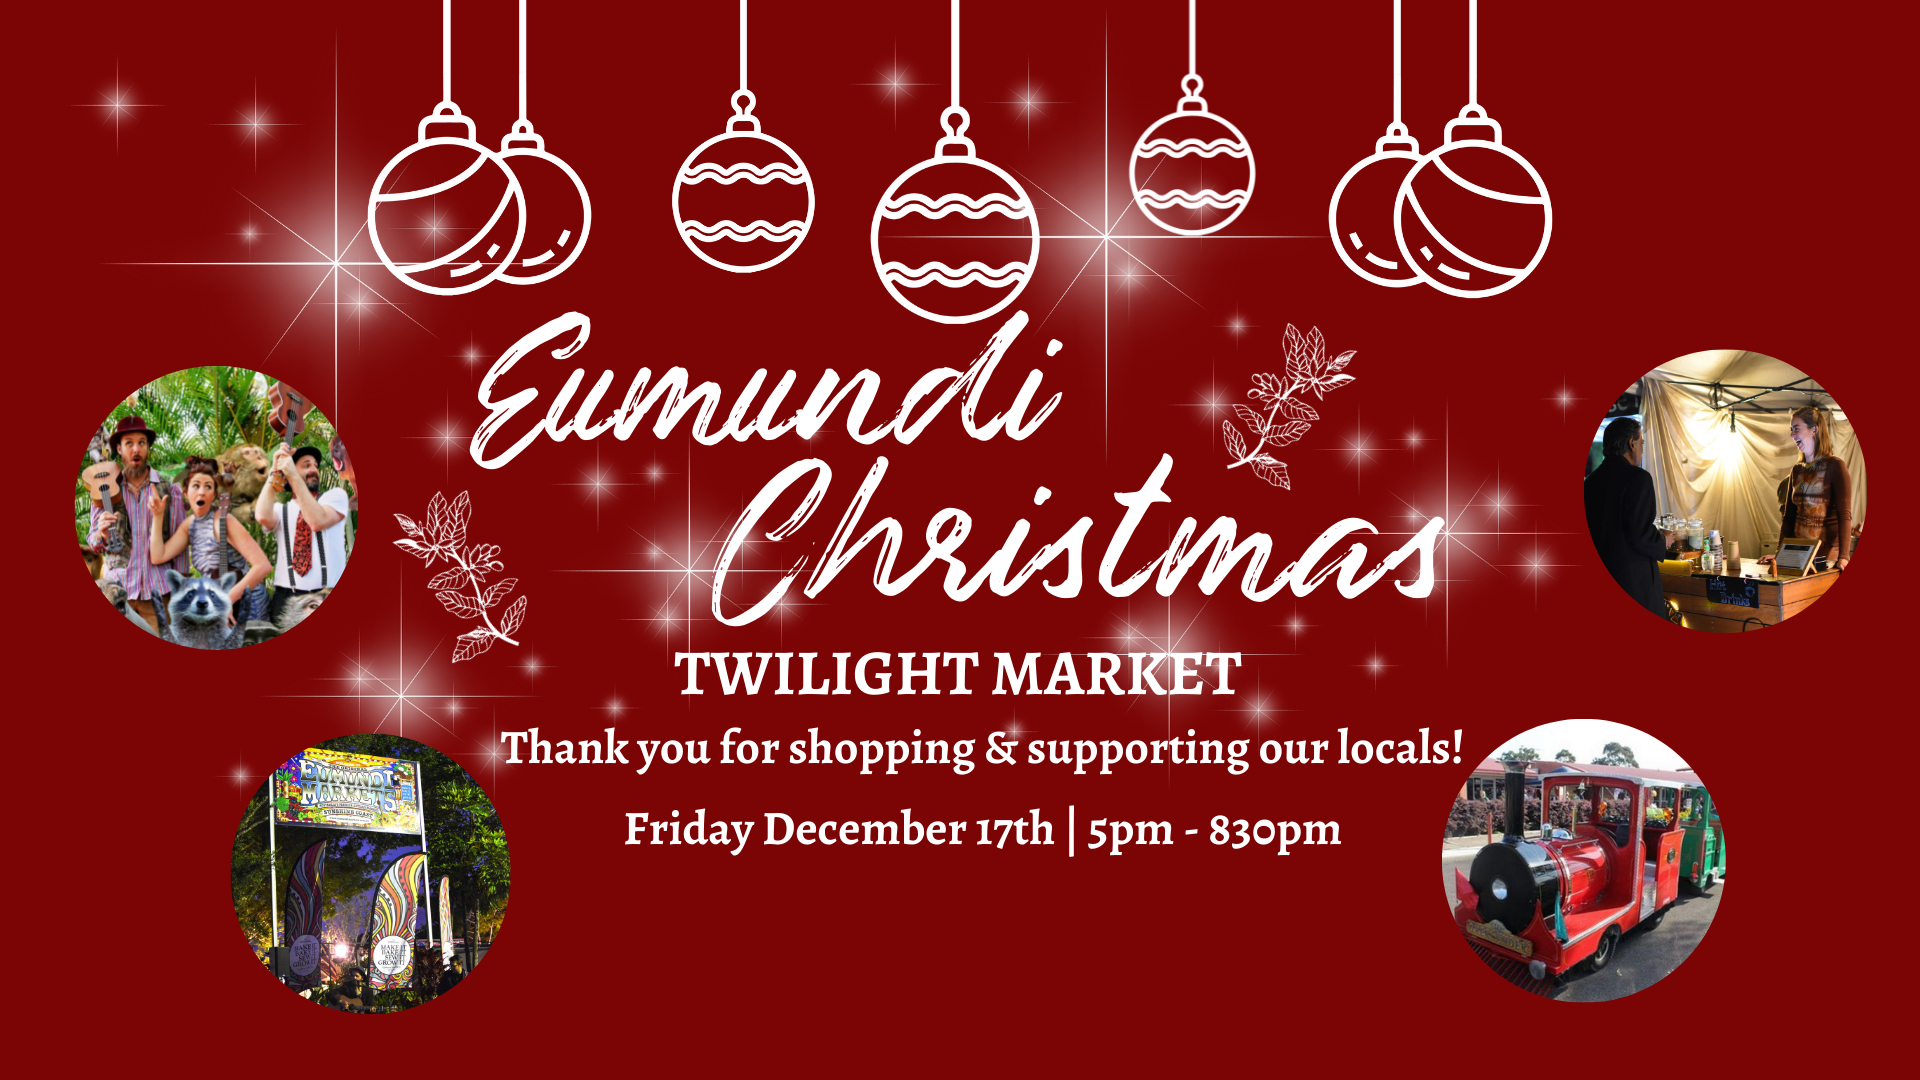 Eumundi Christmas Twilight Markets